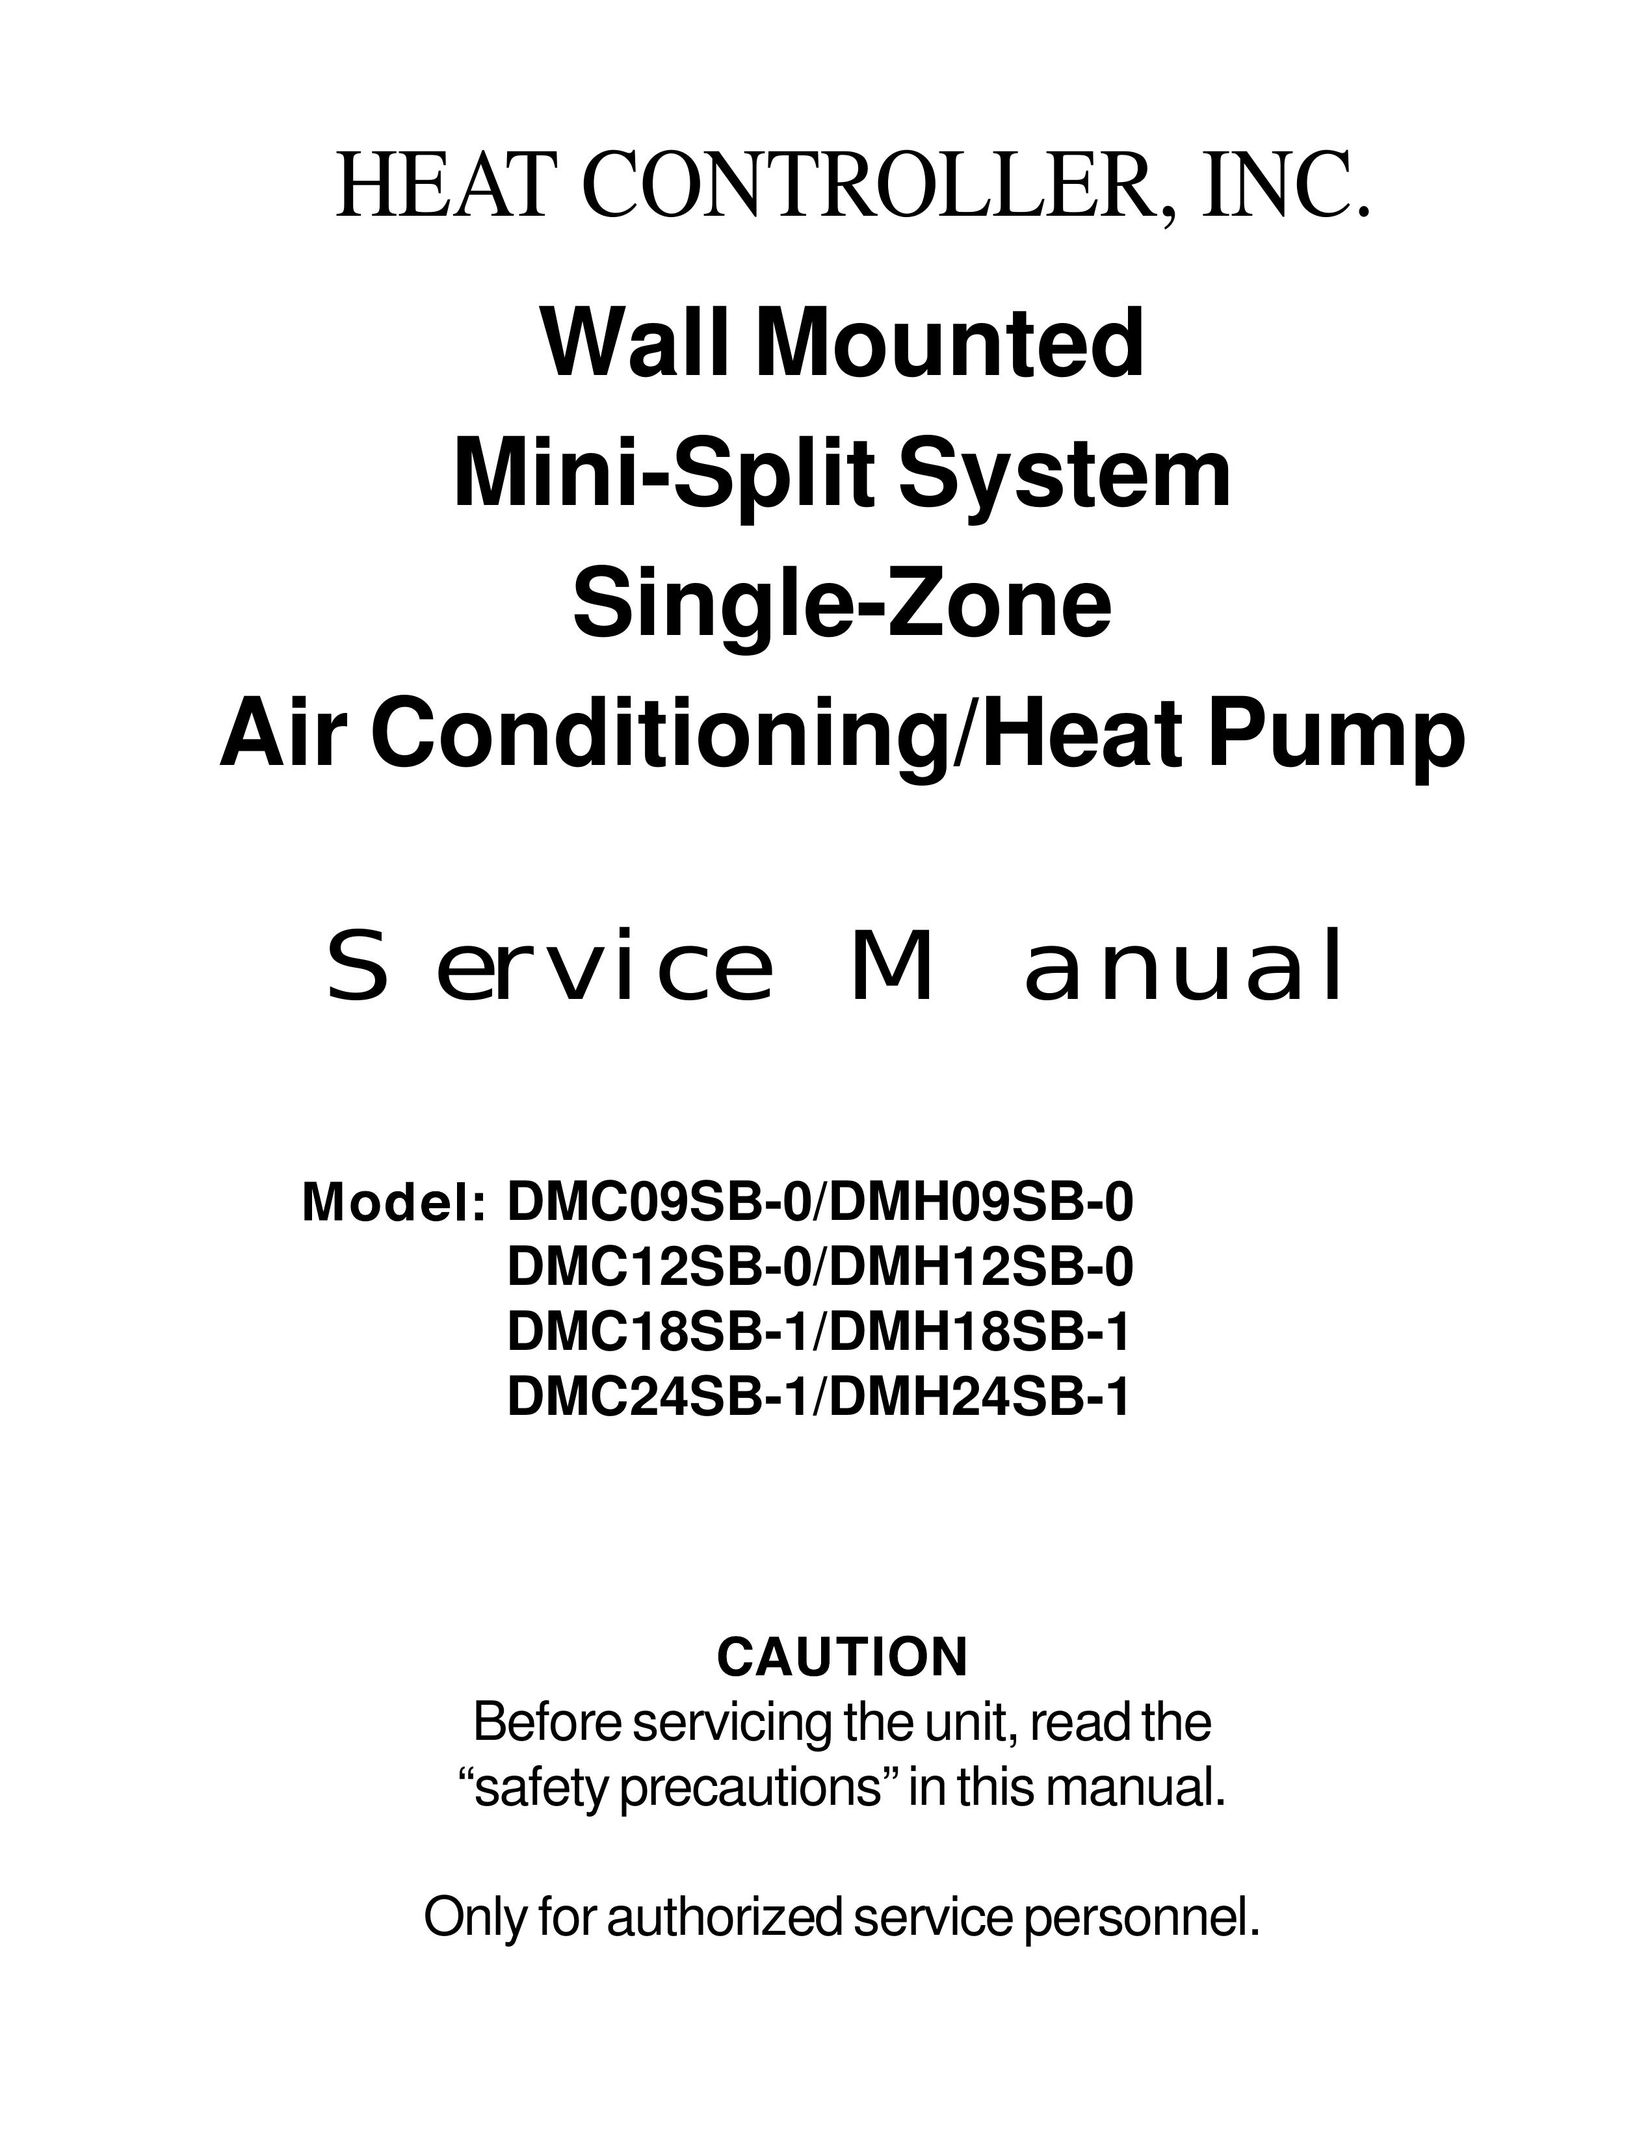 Heat Controller DMC12SB-0 Air Conditioner User Manual